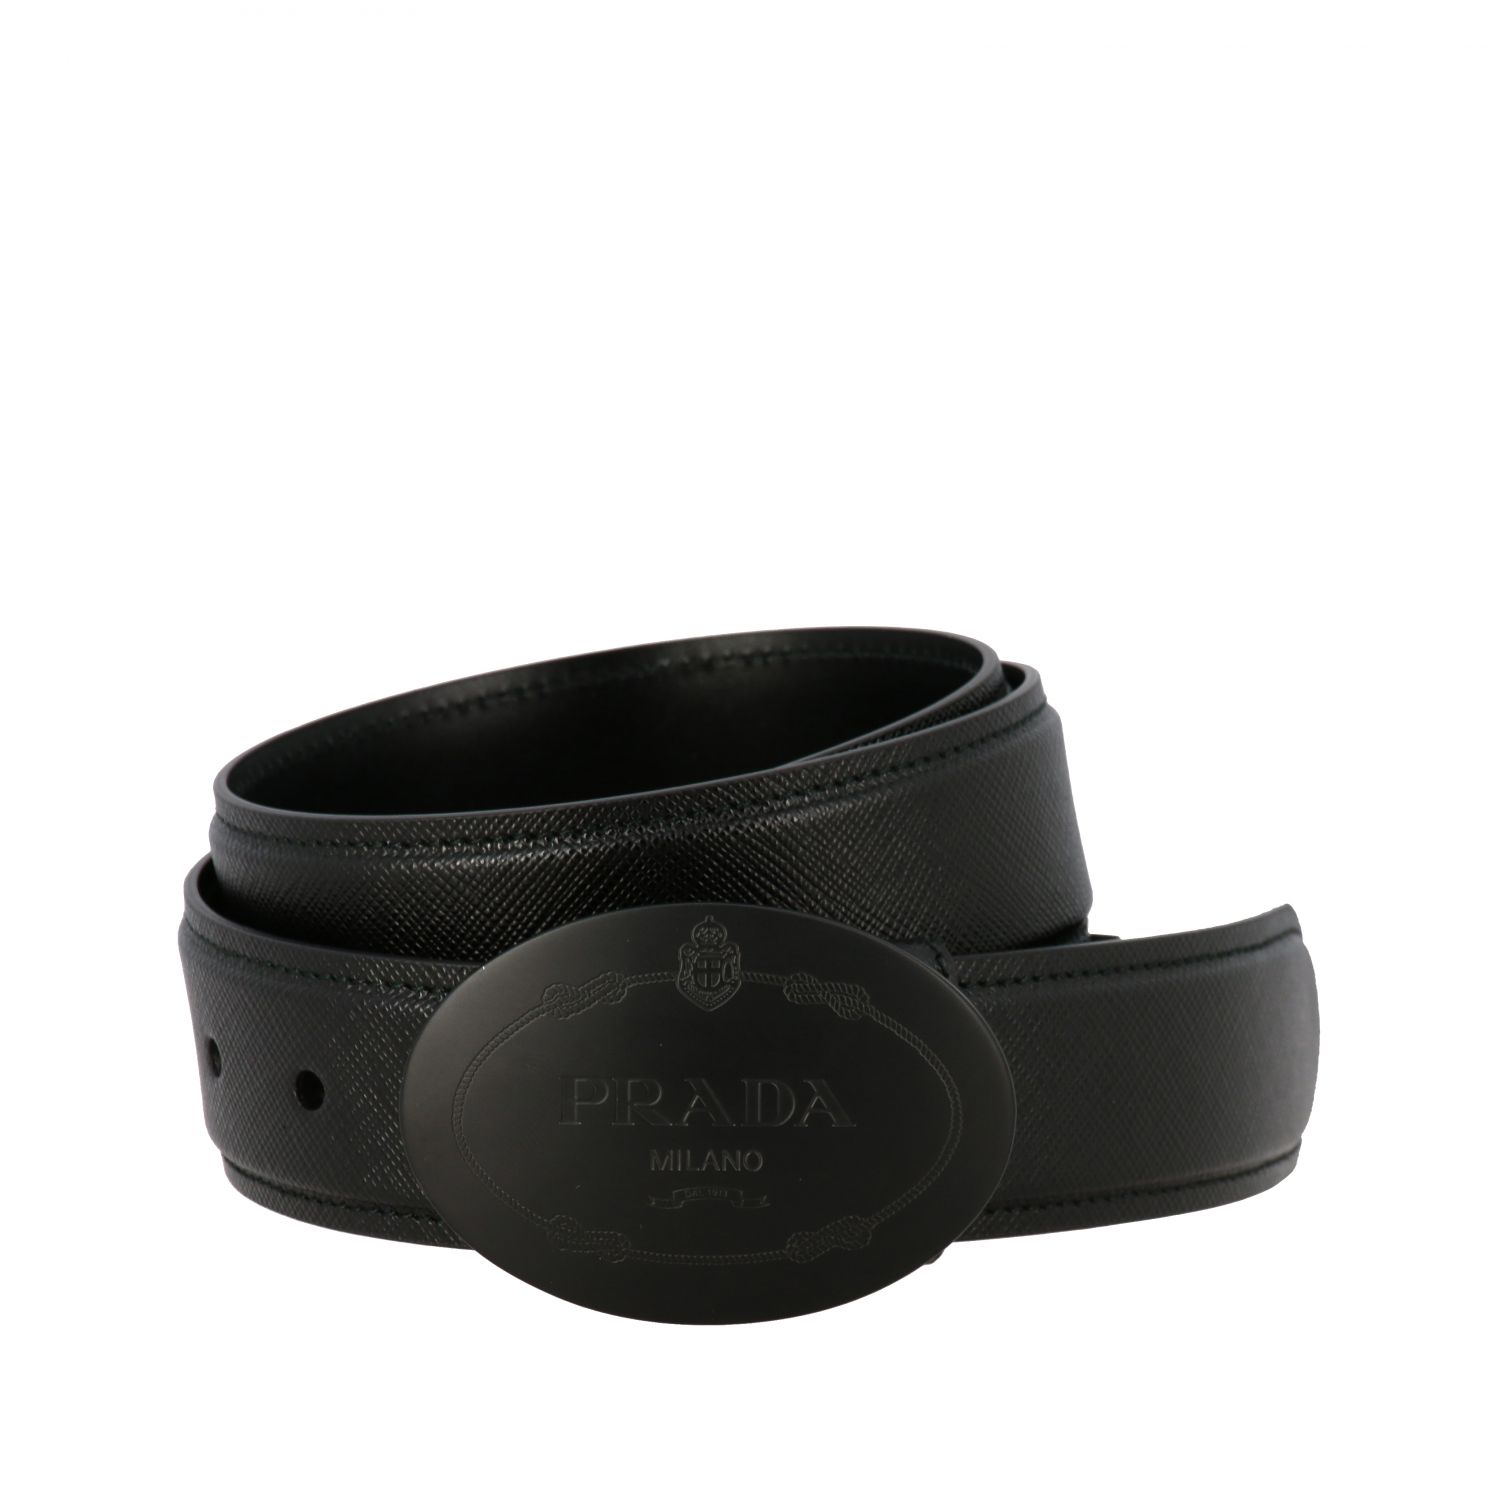 PRADA: saffiano leather belt with oval plaque - Black | Prada belt ...